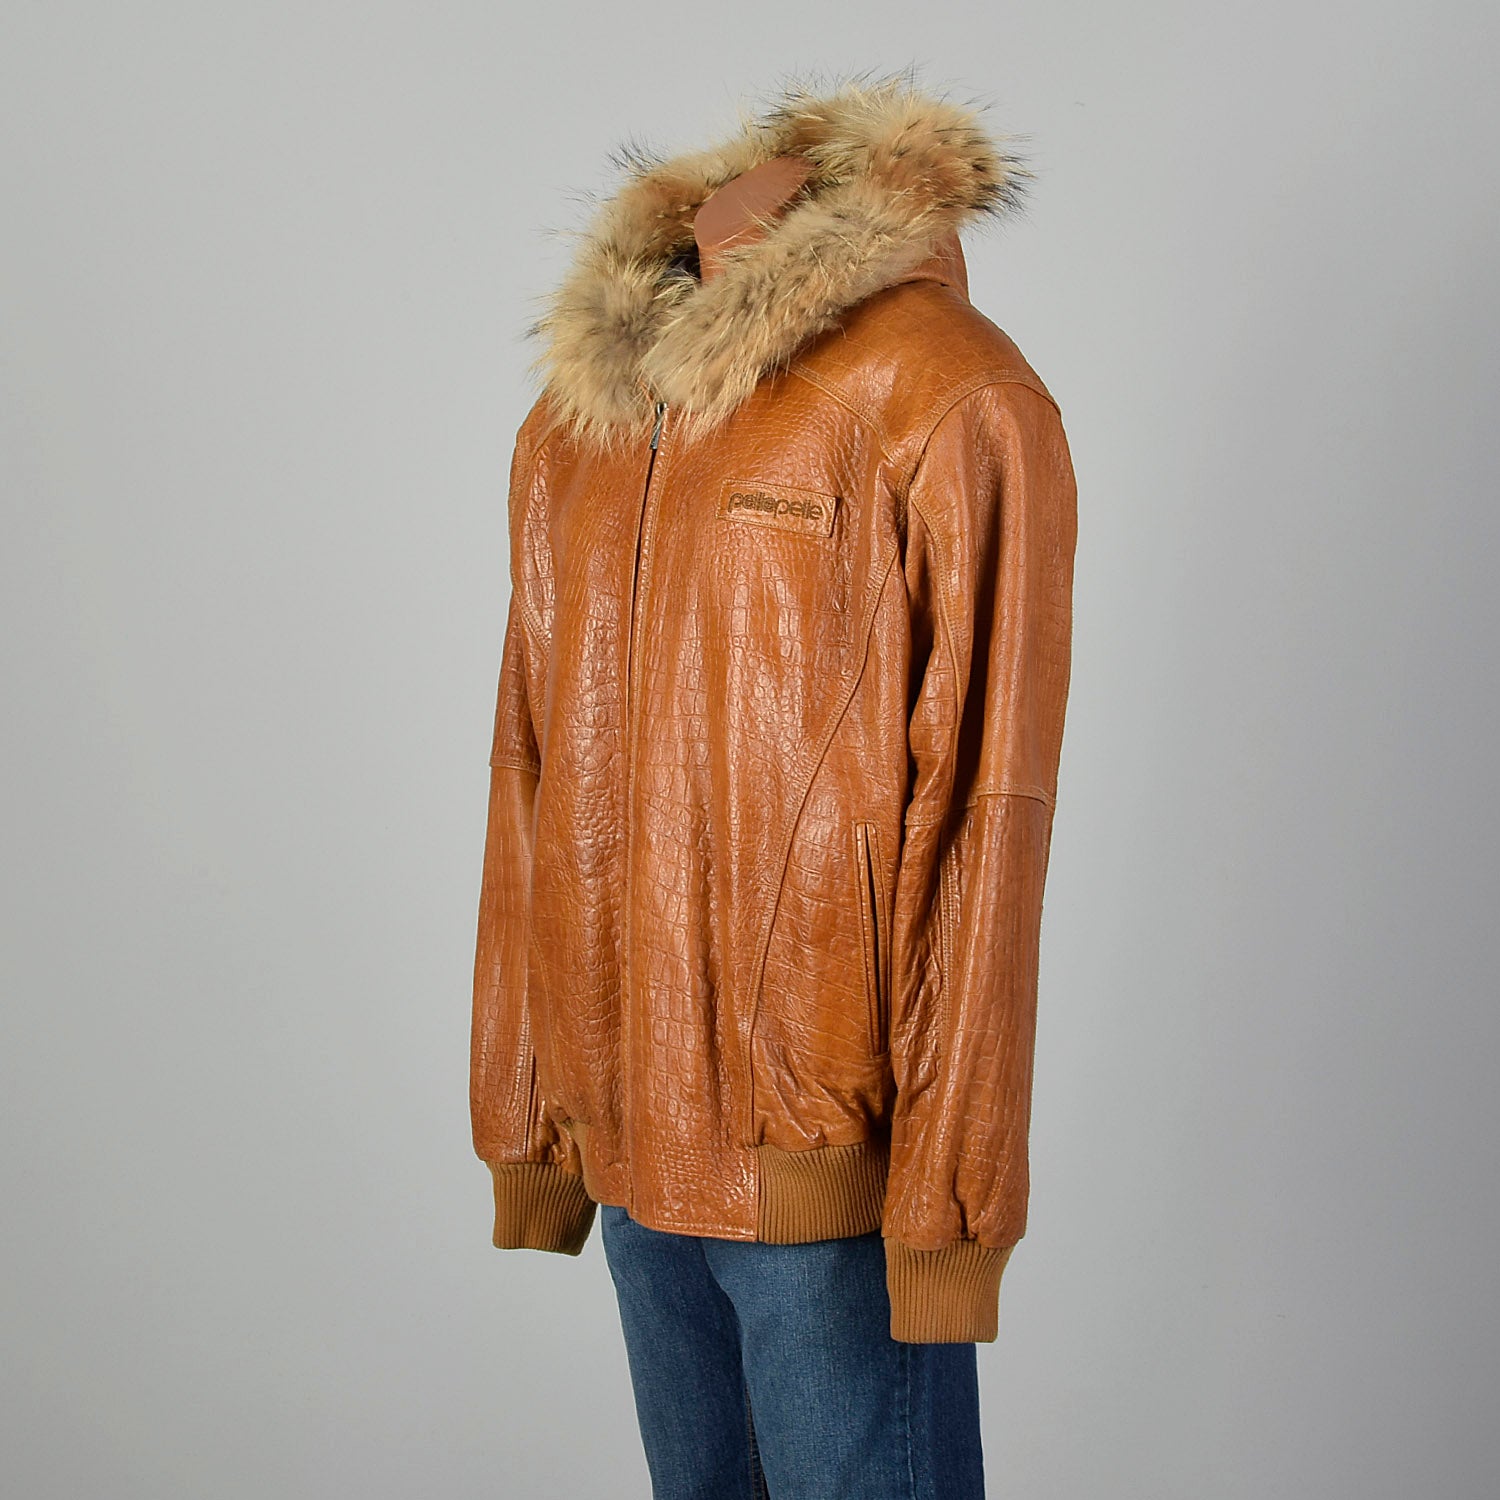 XXL Mens Pelle Pelle Tan Leather Hooded Jacket